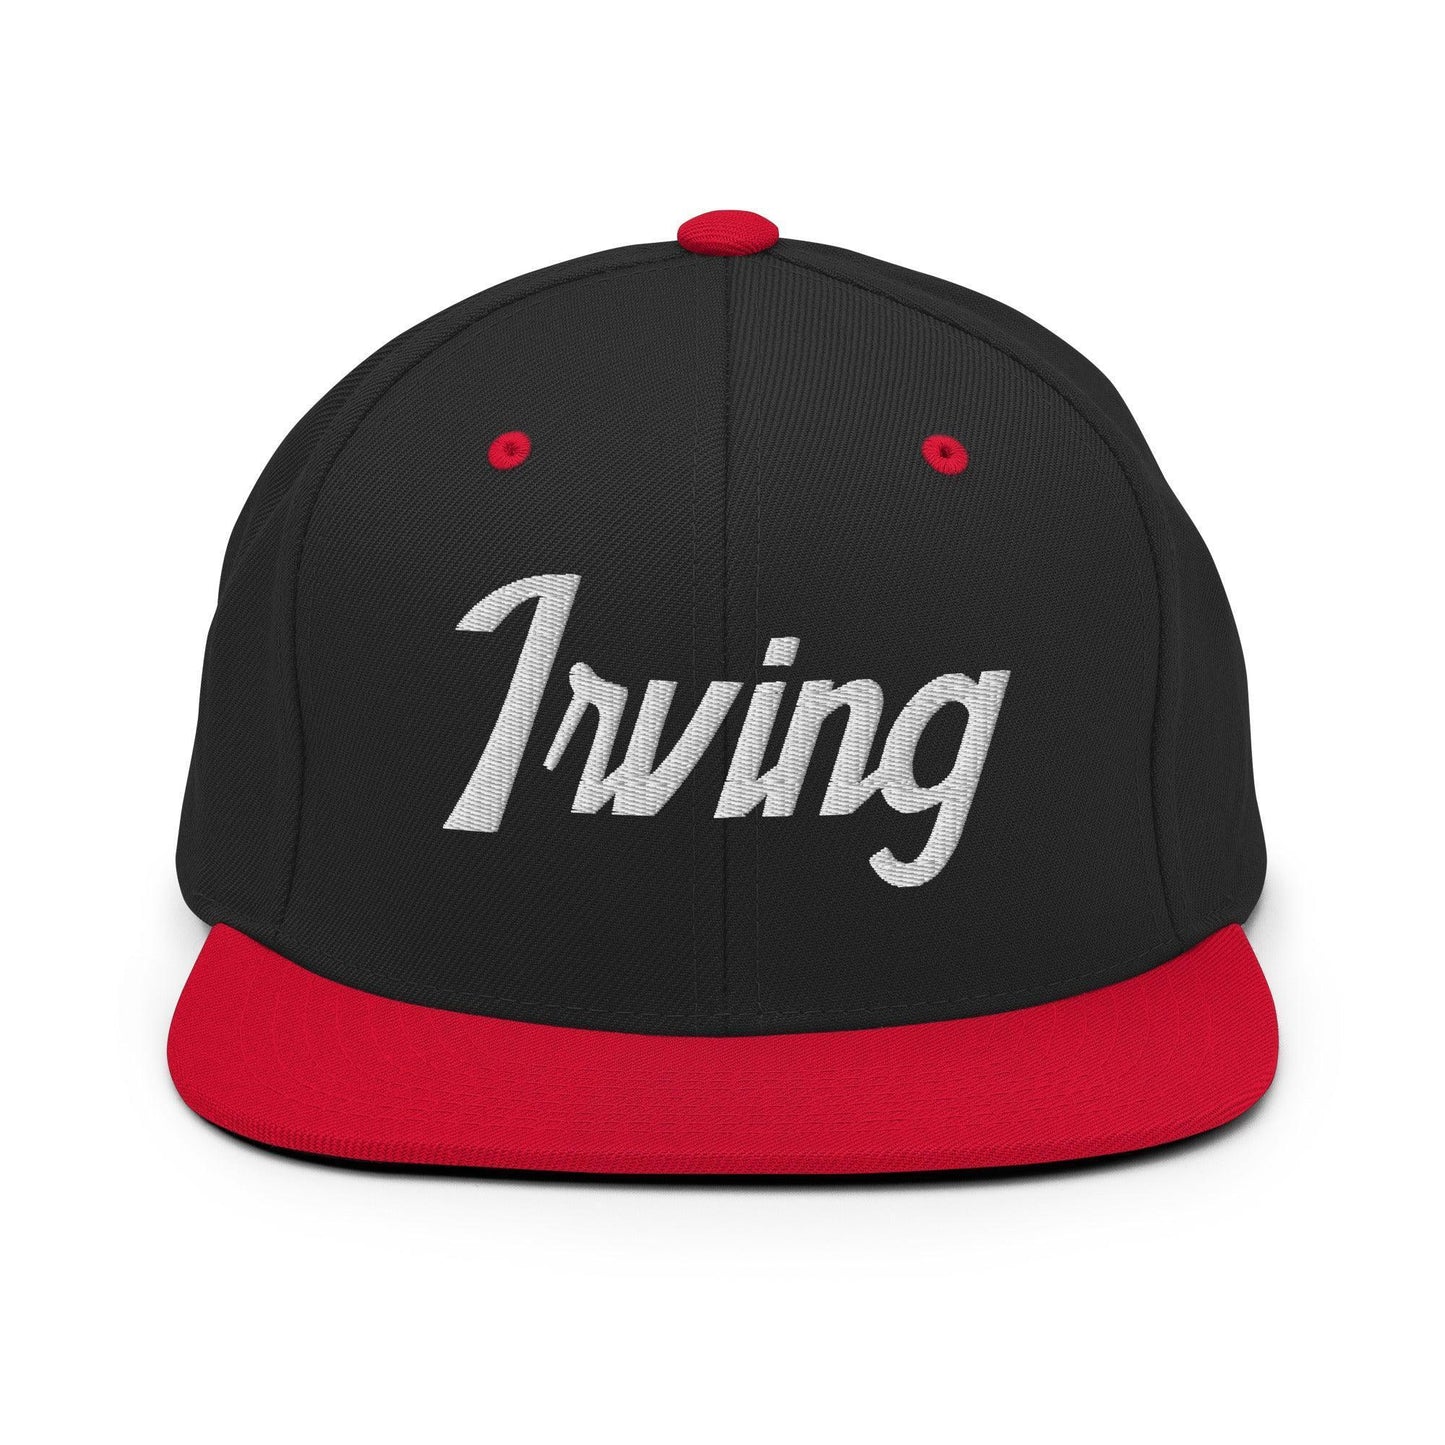 Irving Script Snapback Hat Black Red